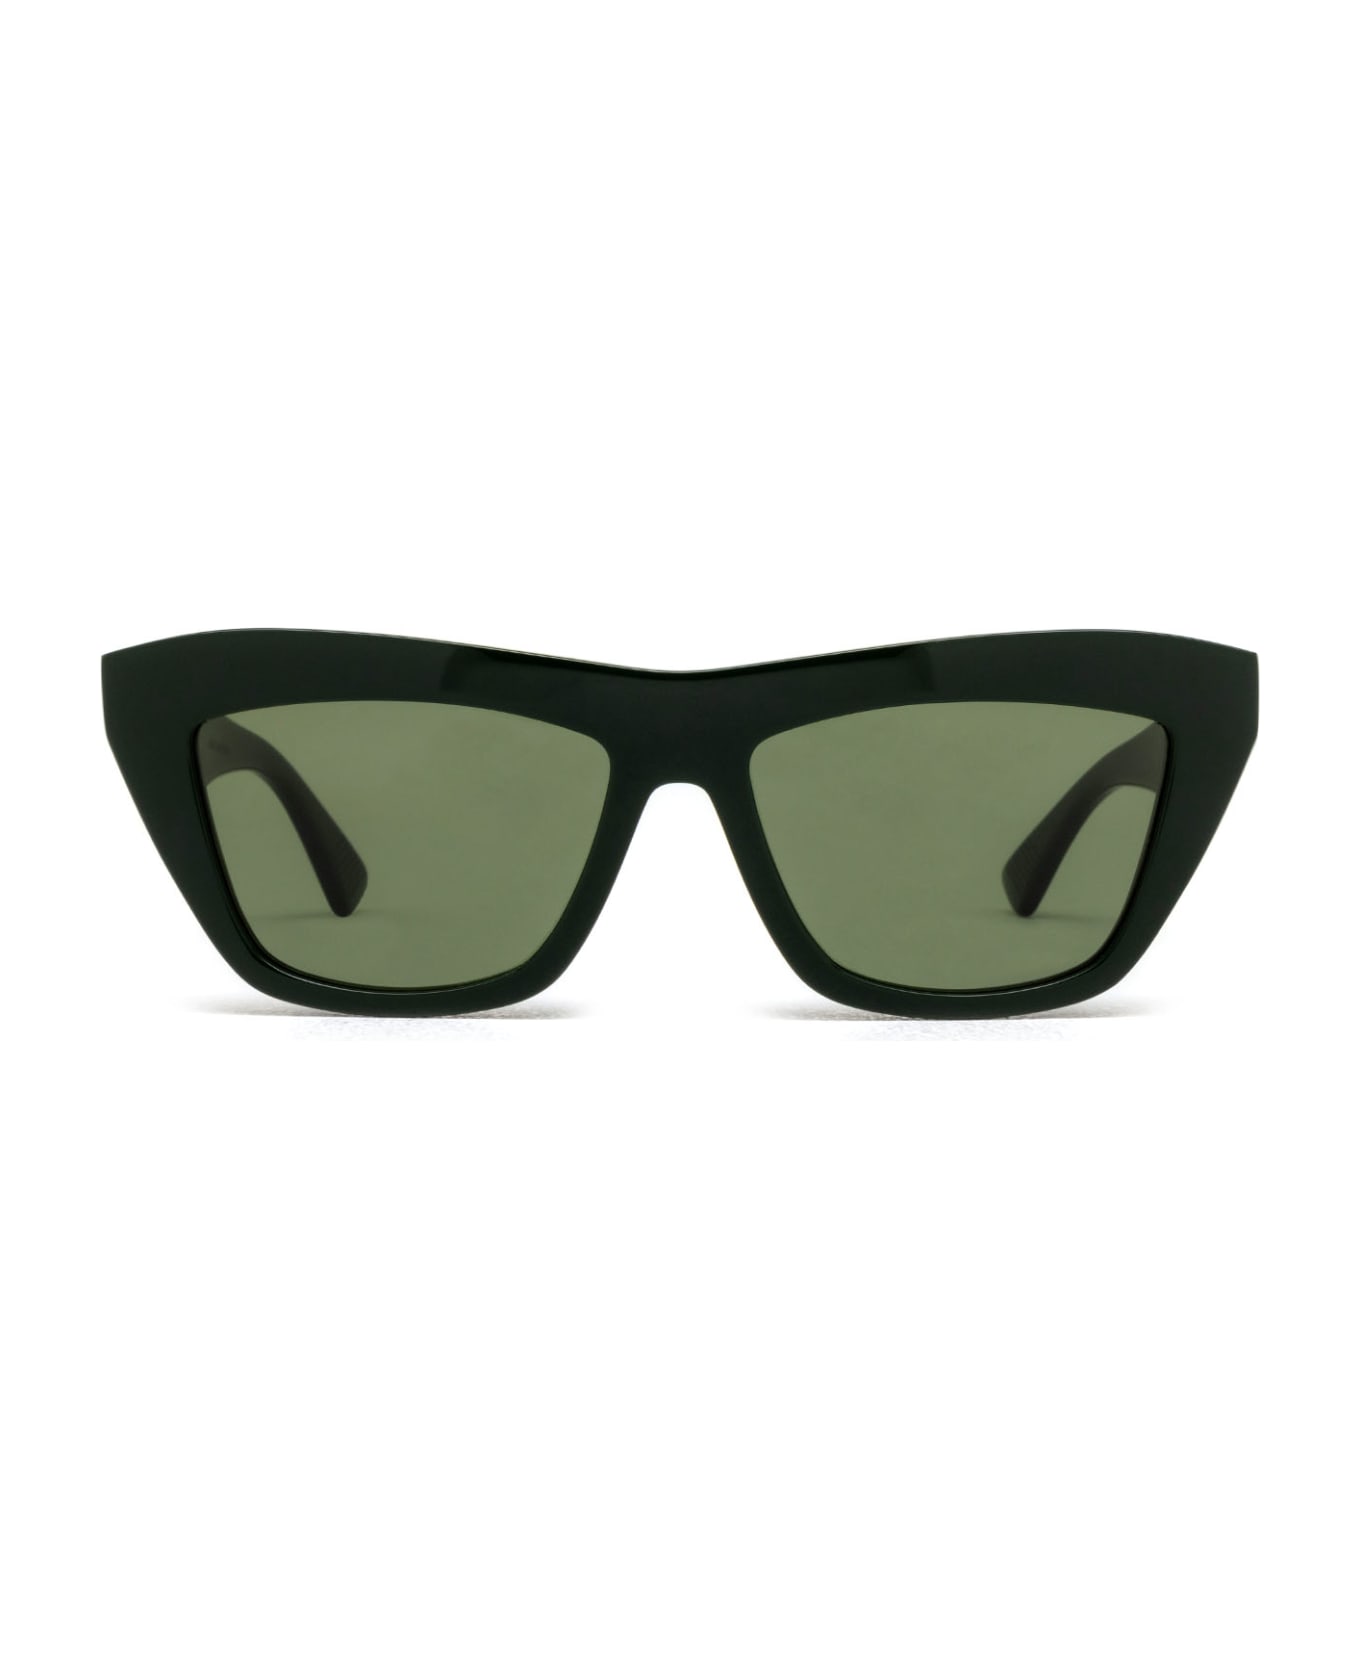 Bottega Veneta Eyewear Bv1121s Green Sunglasses - Green